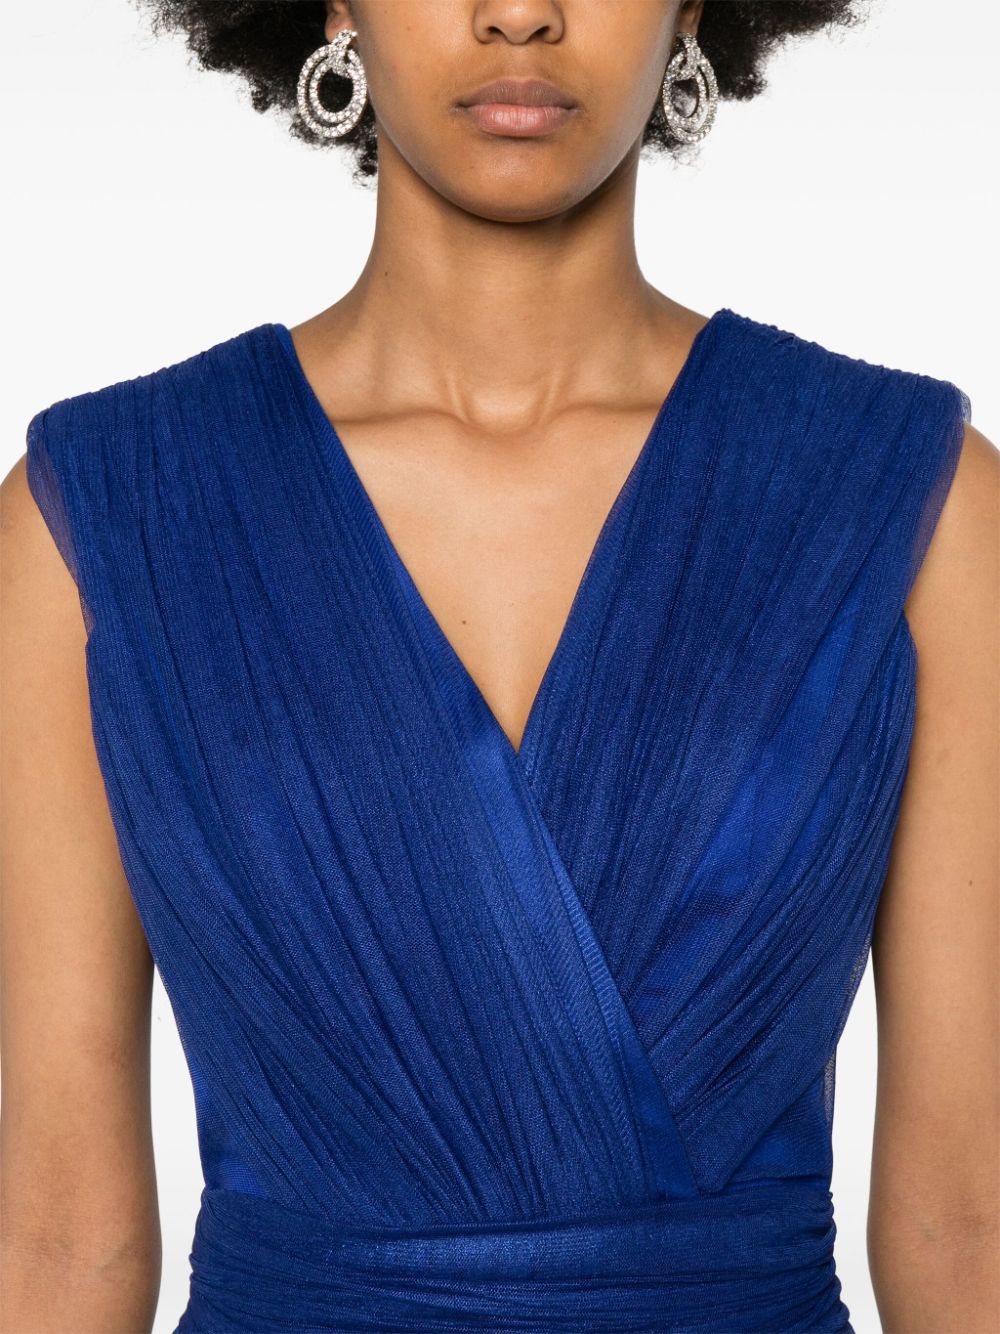 Shop Rhea Costa Draped Midi Dress In Blue